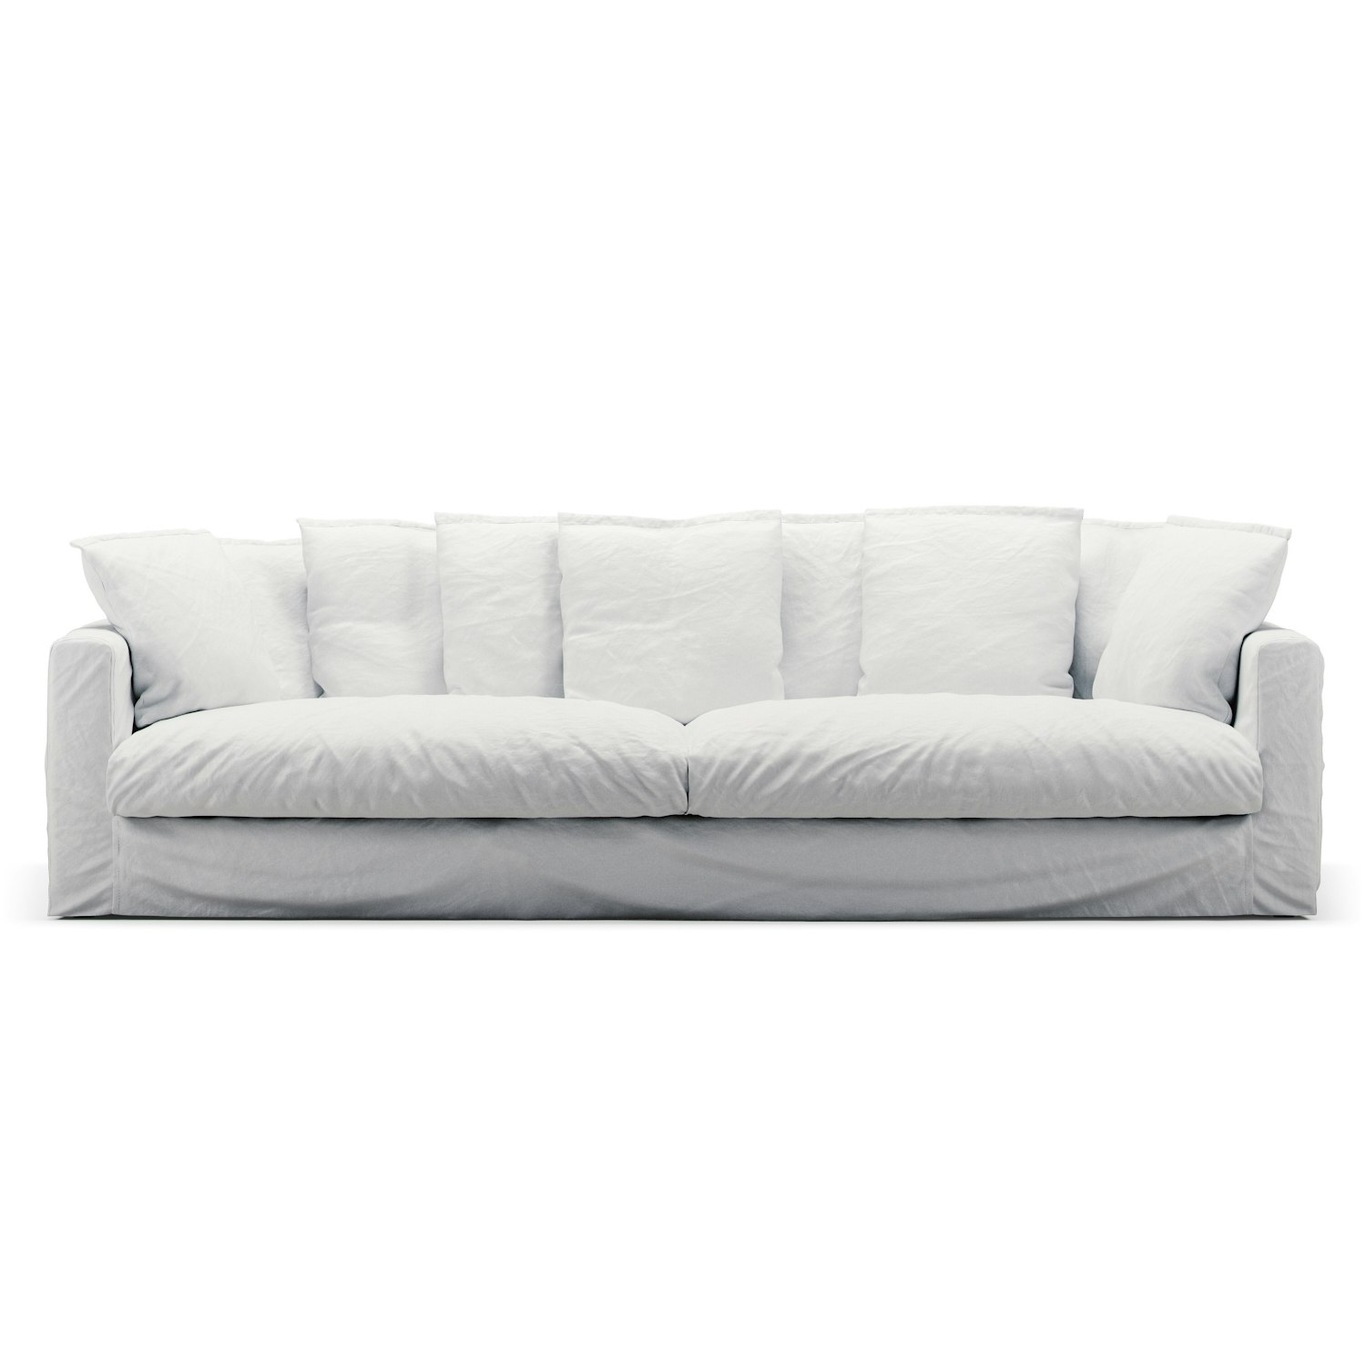 Le Grand Air Bezug XL 4-Sitzer Baumwolle, Weiß